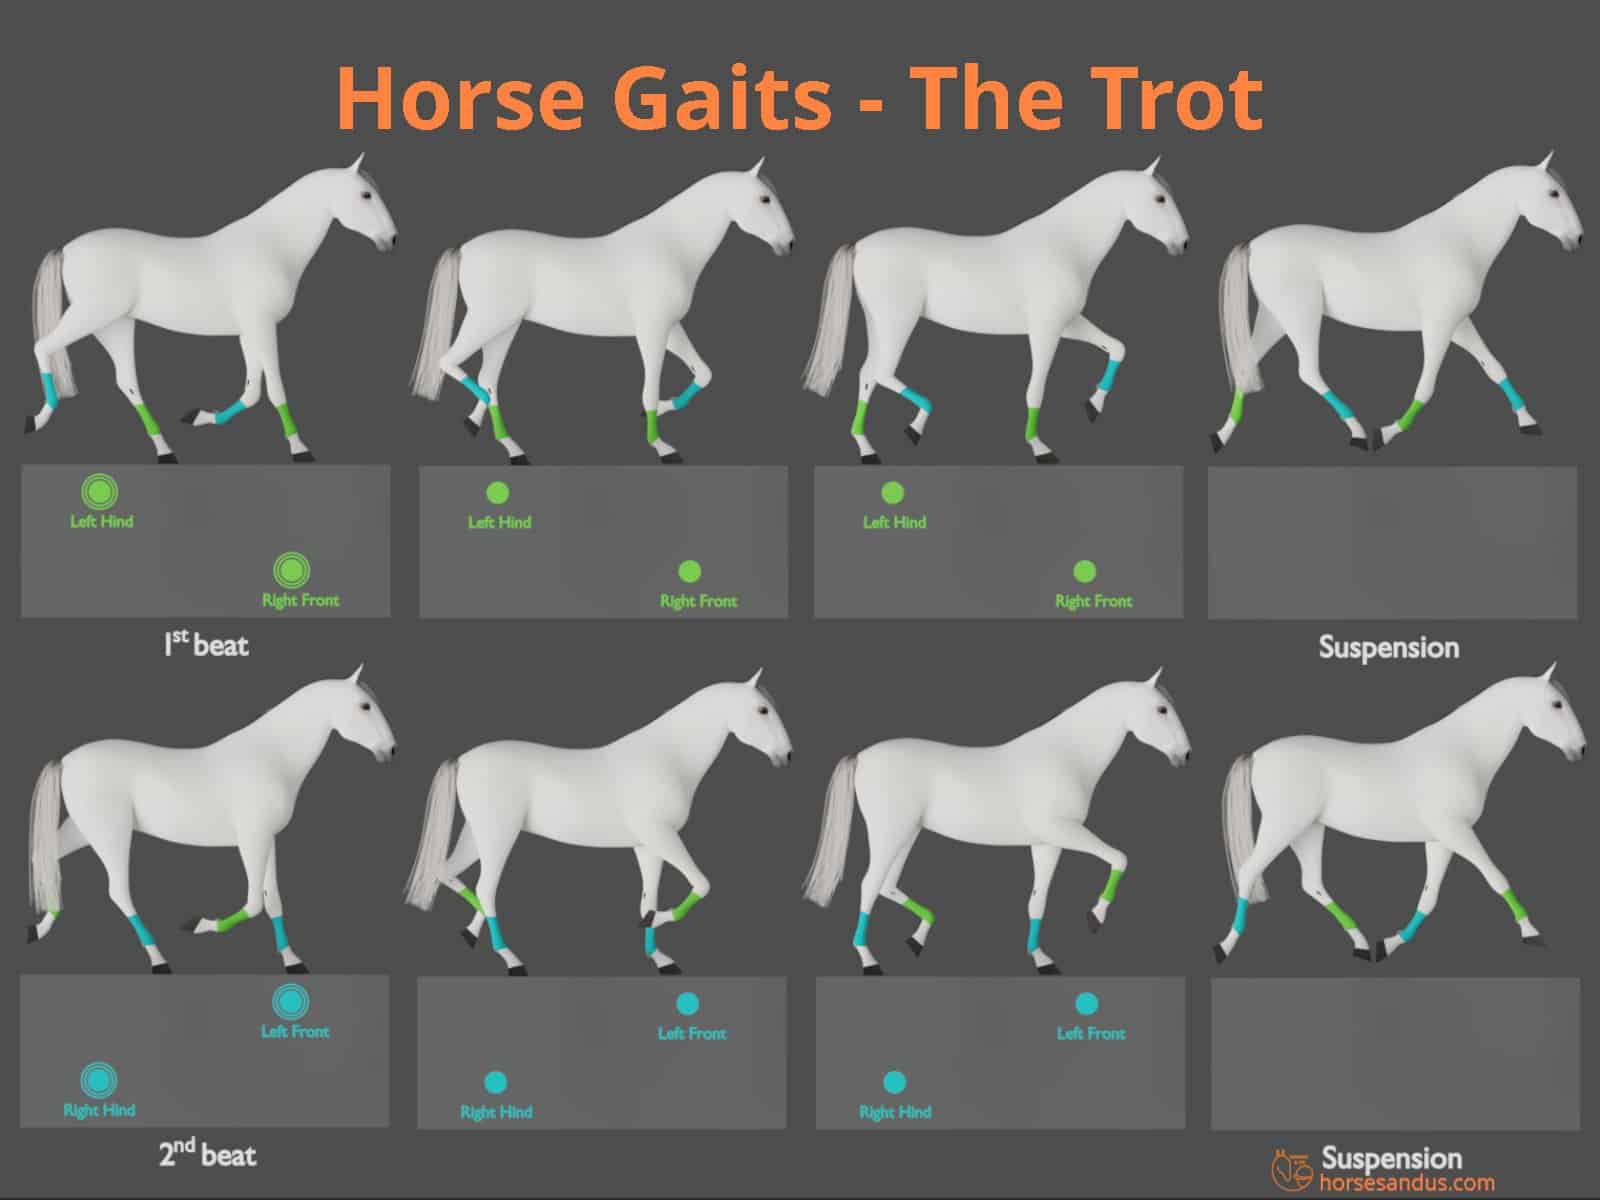 The 4 Basic Horse Gaits Explained [Diagrams & Animations]